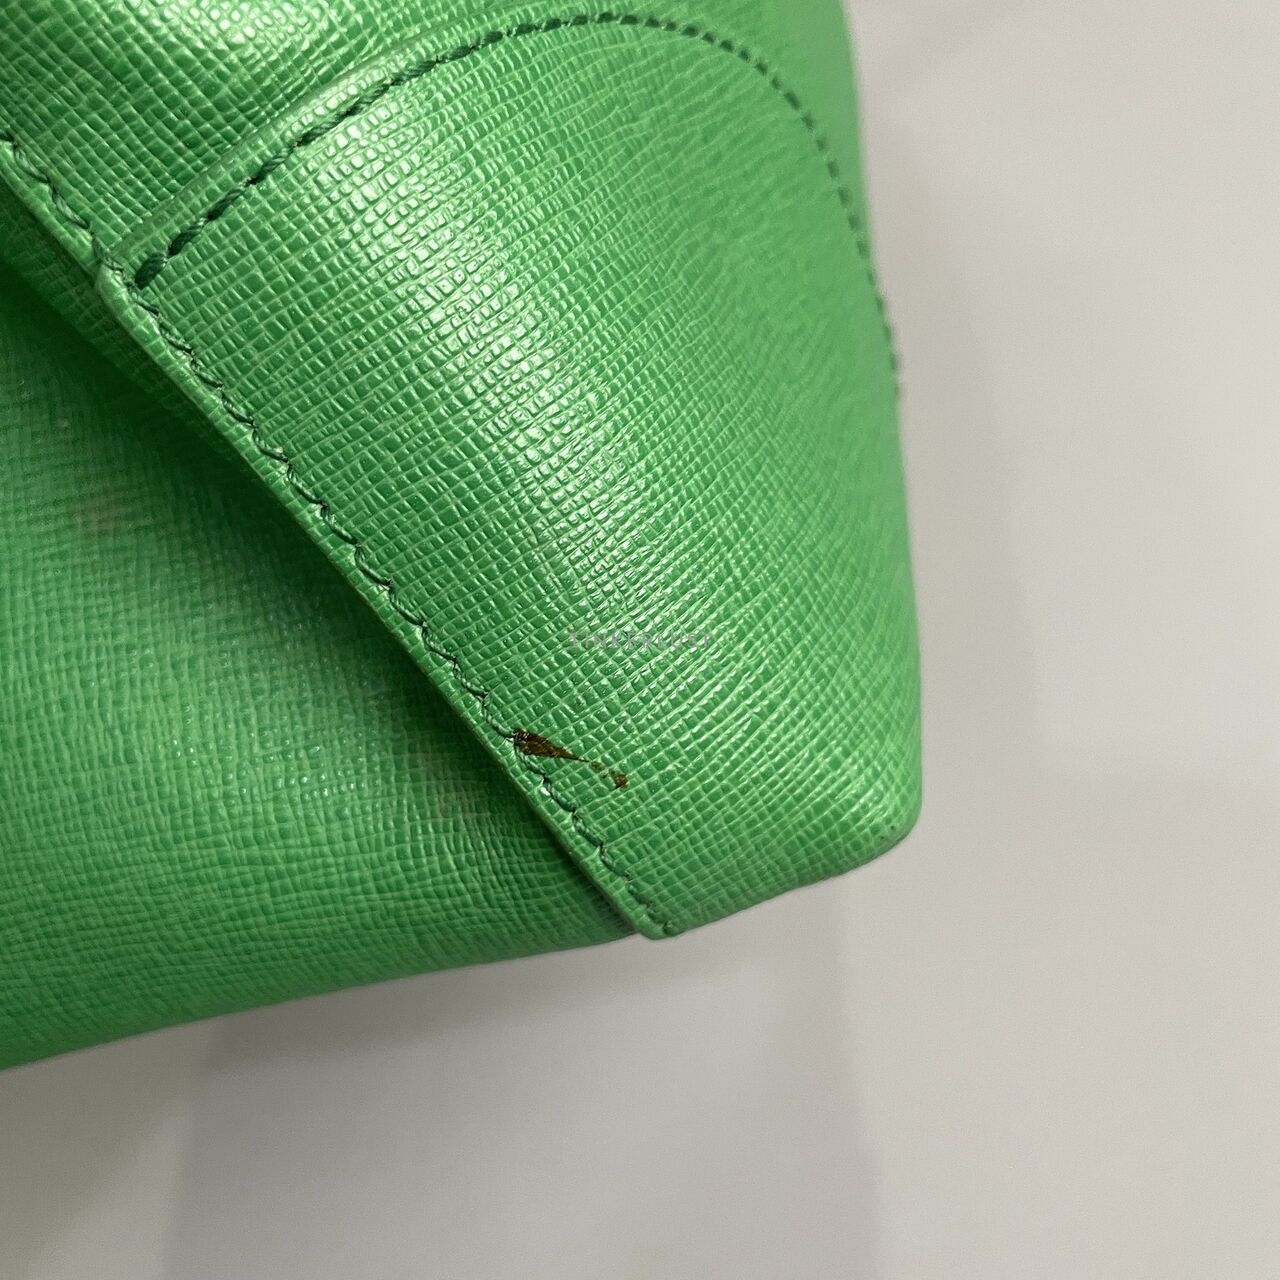 Furla Piper Green Leather GHW Satchel